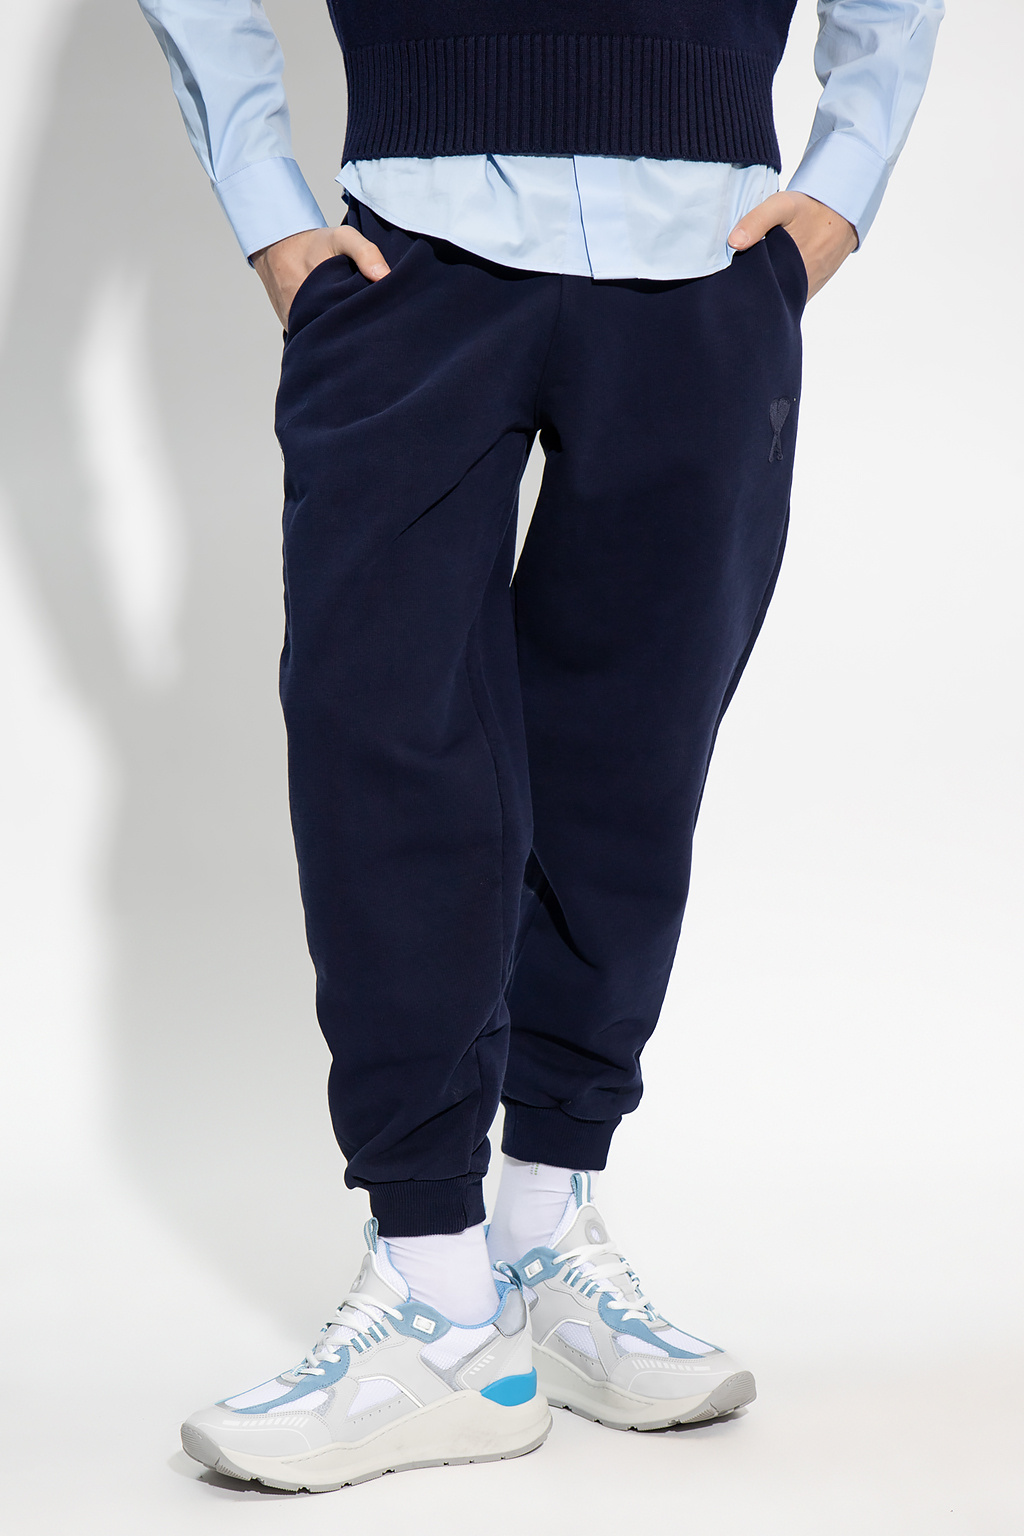 jeans elastique zara - GenesinlifeShops KR - Navy blue jack wills redbrook  classic leggings Ami Alexandre Mattiussi